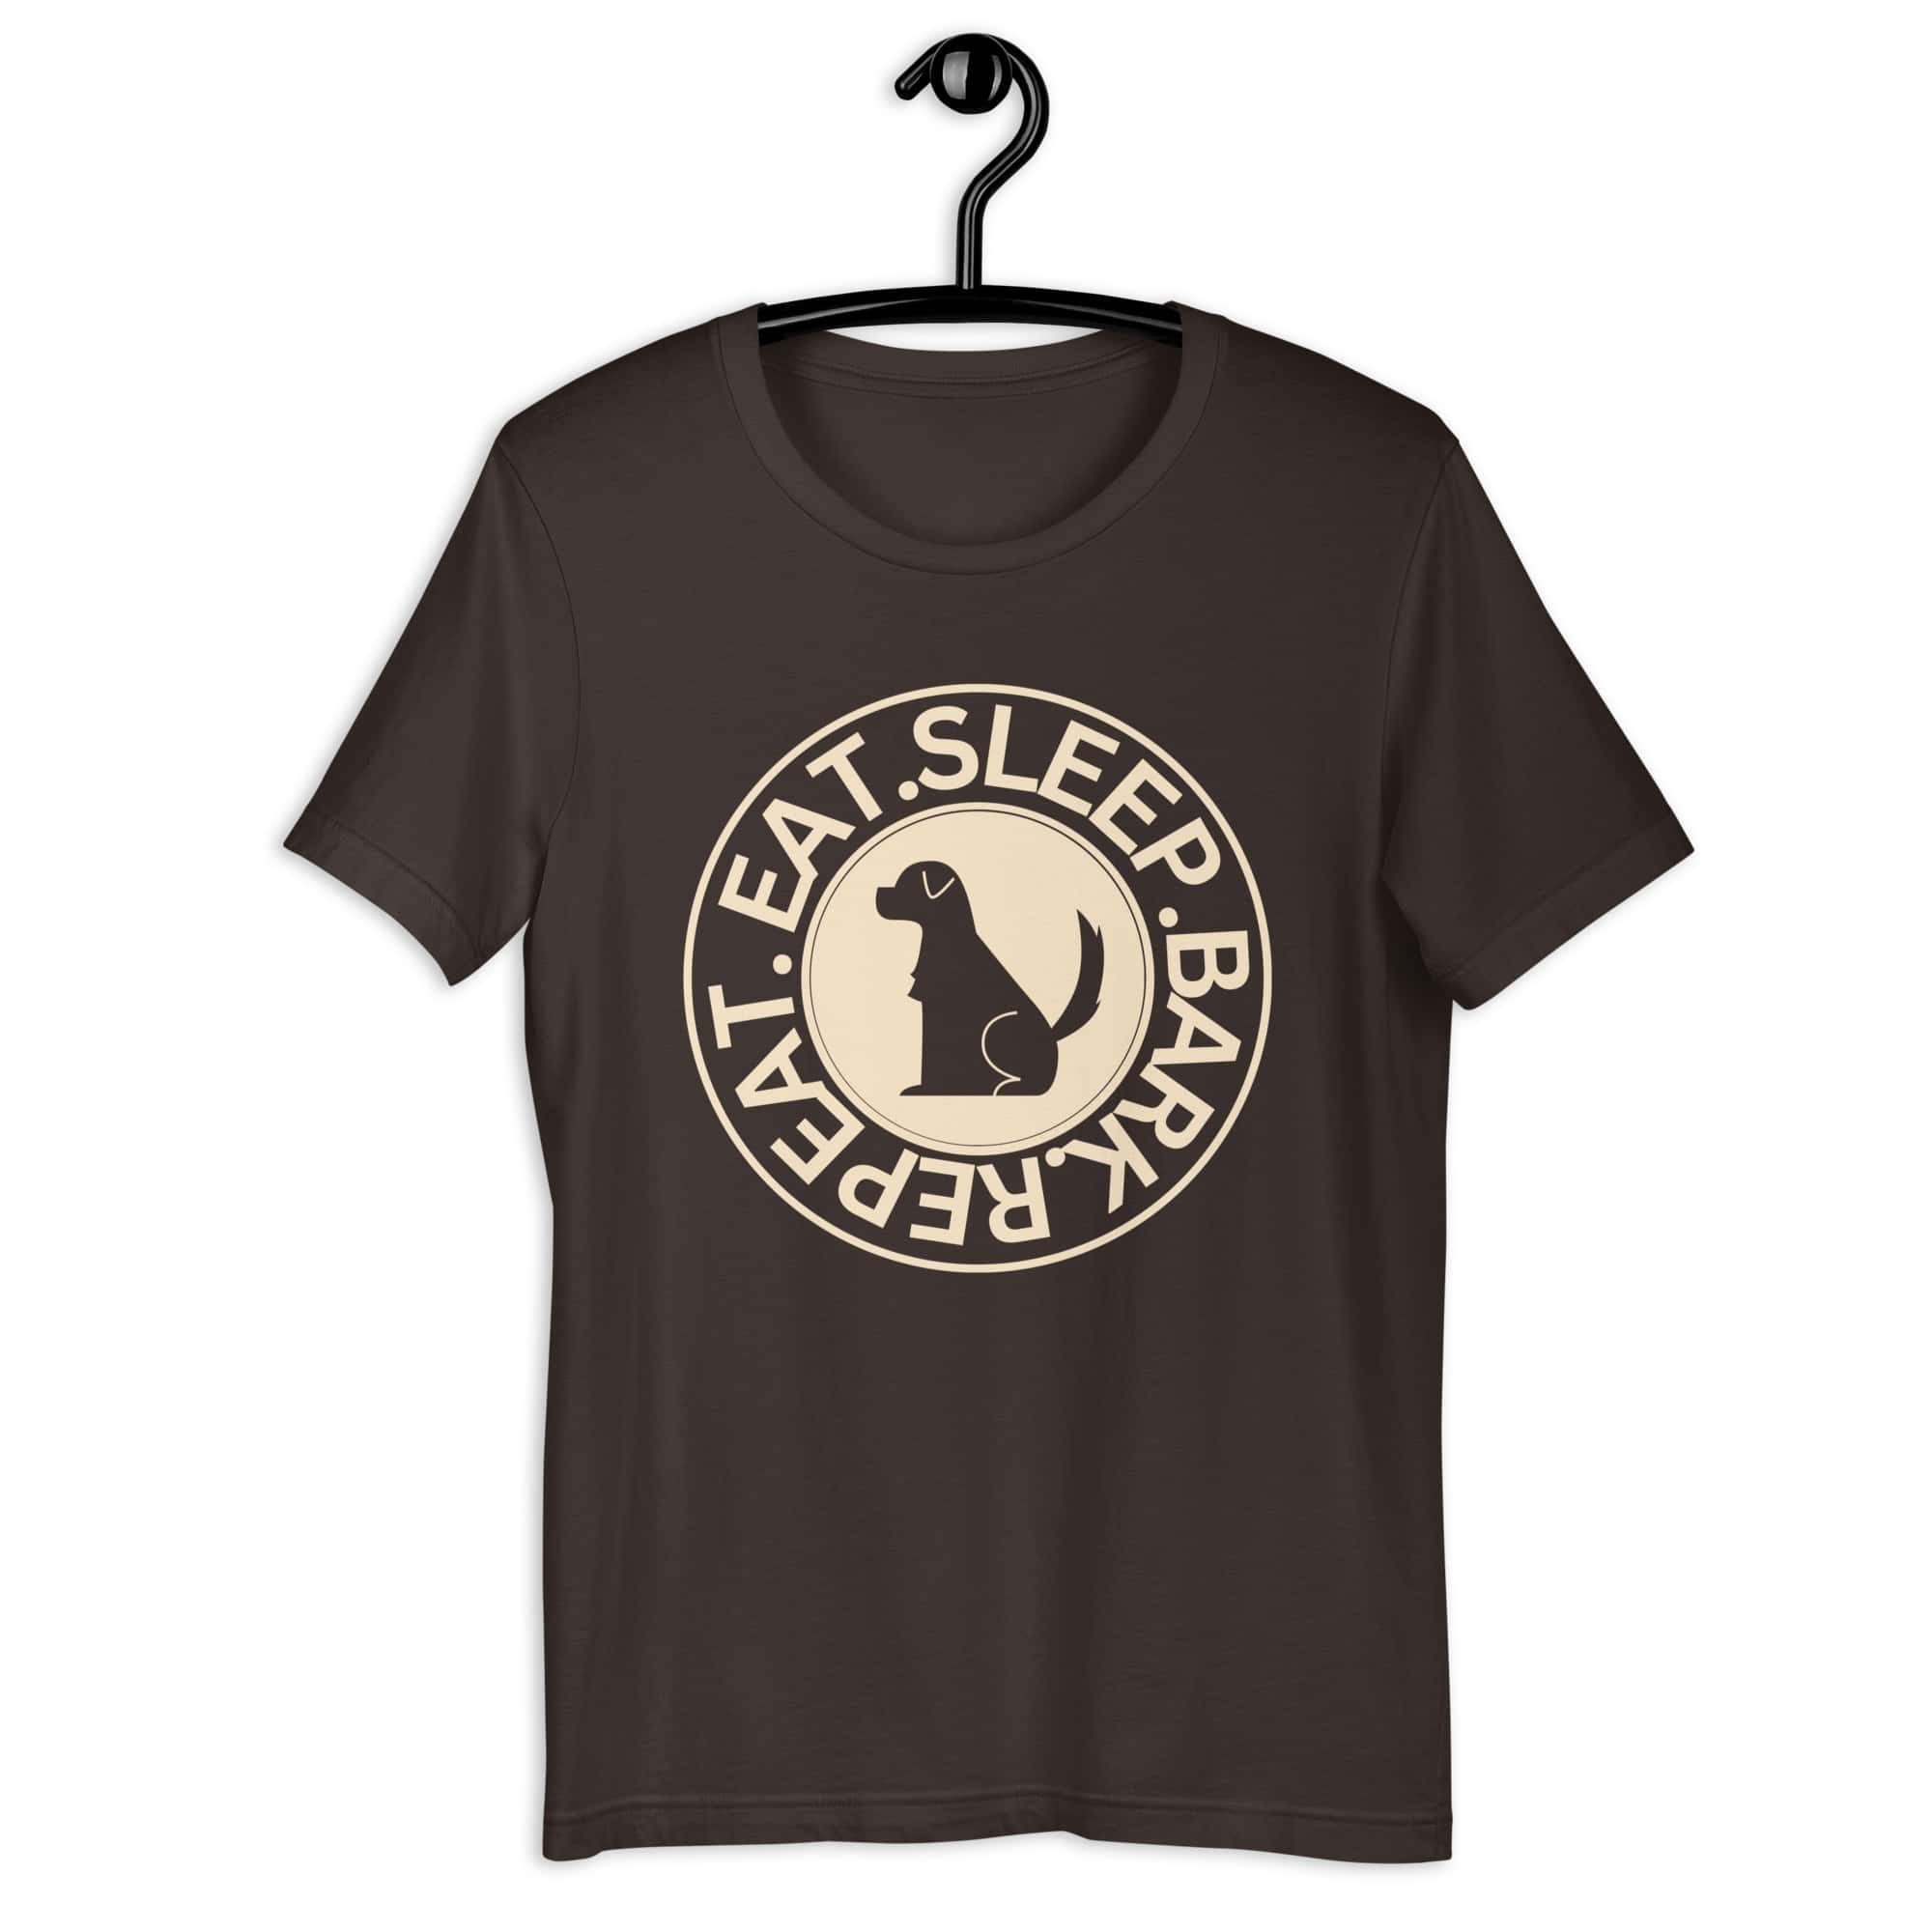 Eat Sleep Bark Repeat Ansylvanian Hound Unisex T-Shirt. Brown